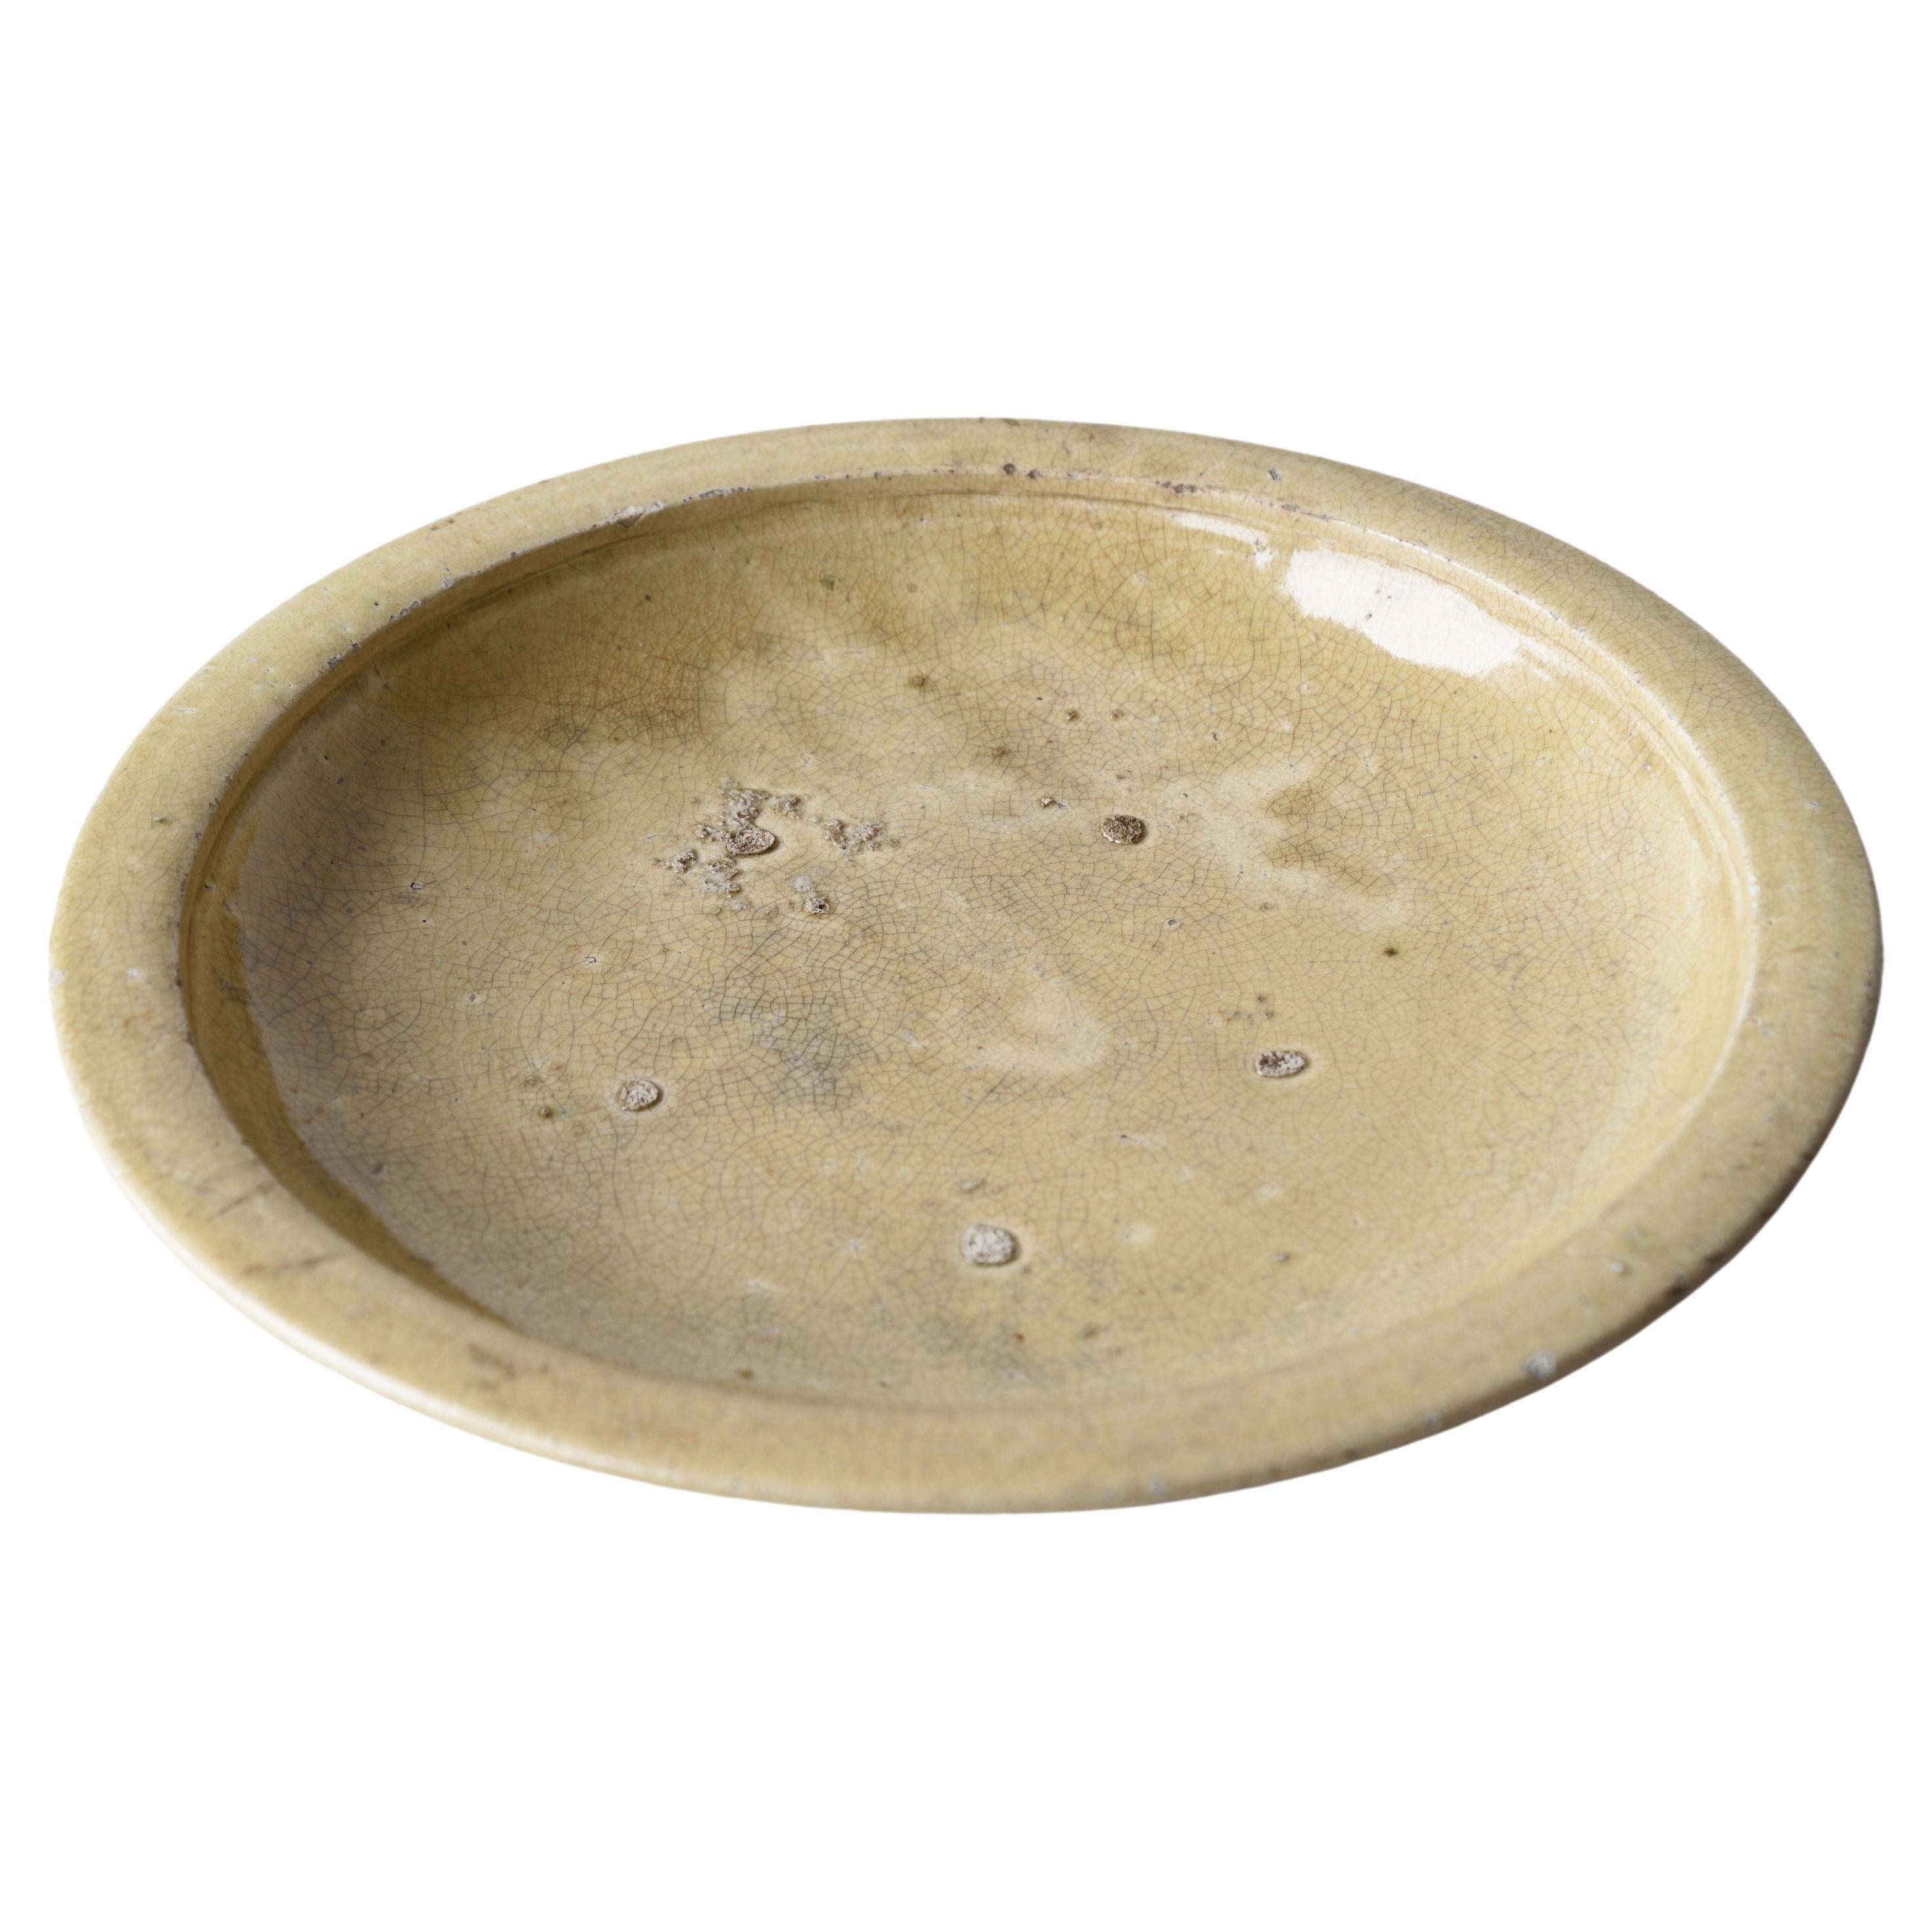 Edo-Meiji 19th century Japanese mingei Seto stoneware Ishizara plate